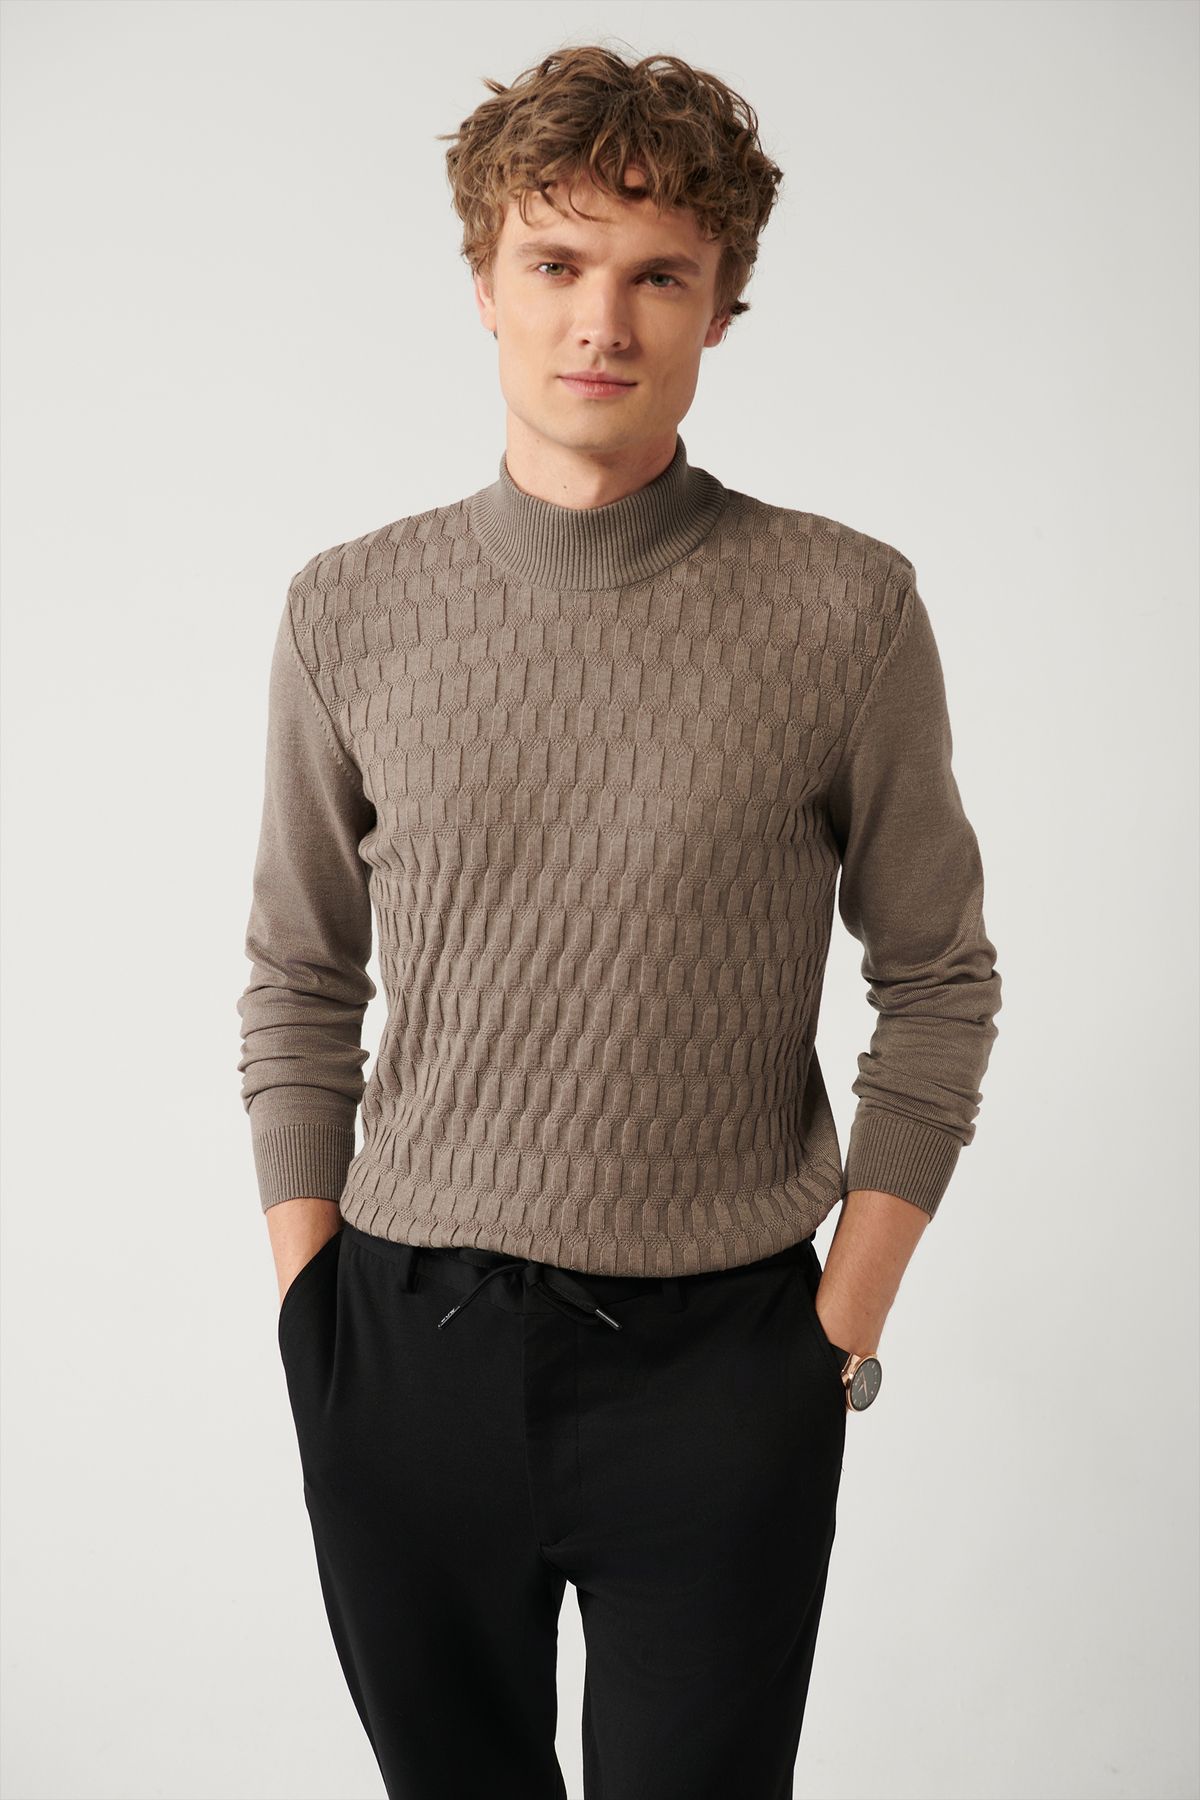 Avva Men's Mink Knitwear Sweater Half Turtleneck Front Textured Cotton Regular Fit